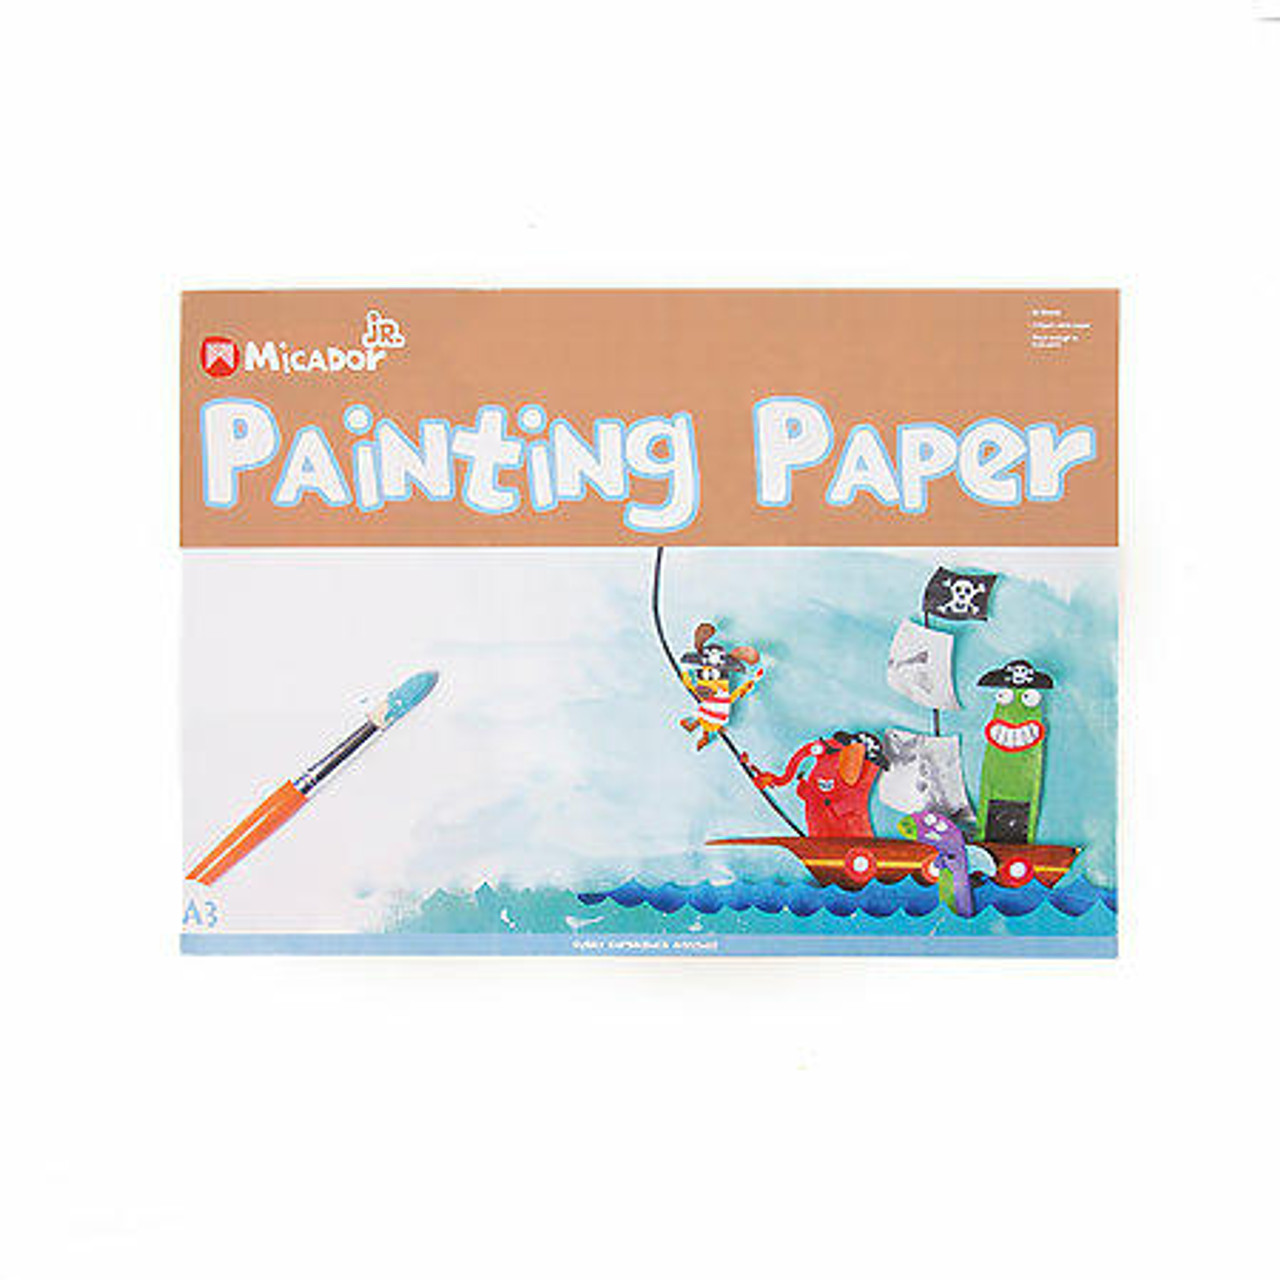 Micador jR. early stART Painting Paper Pad, 11.7 x 16.5 - Sam Flax Atlanta